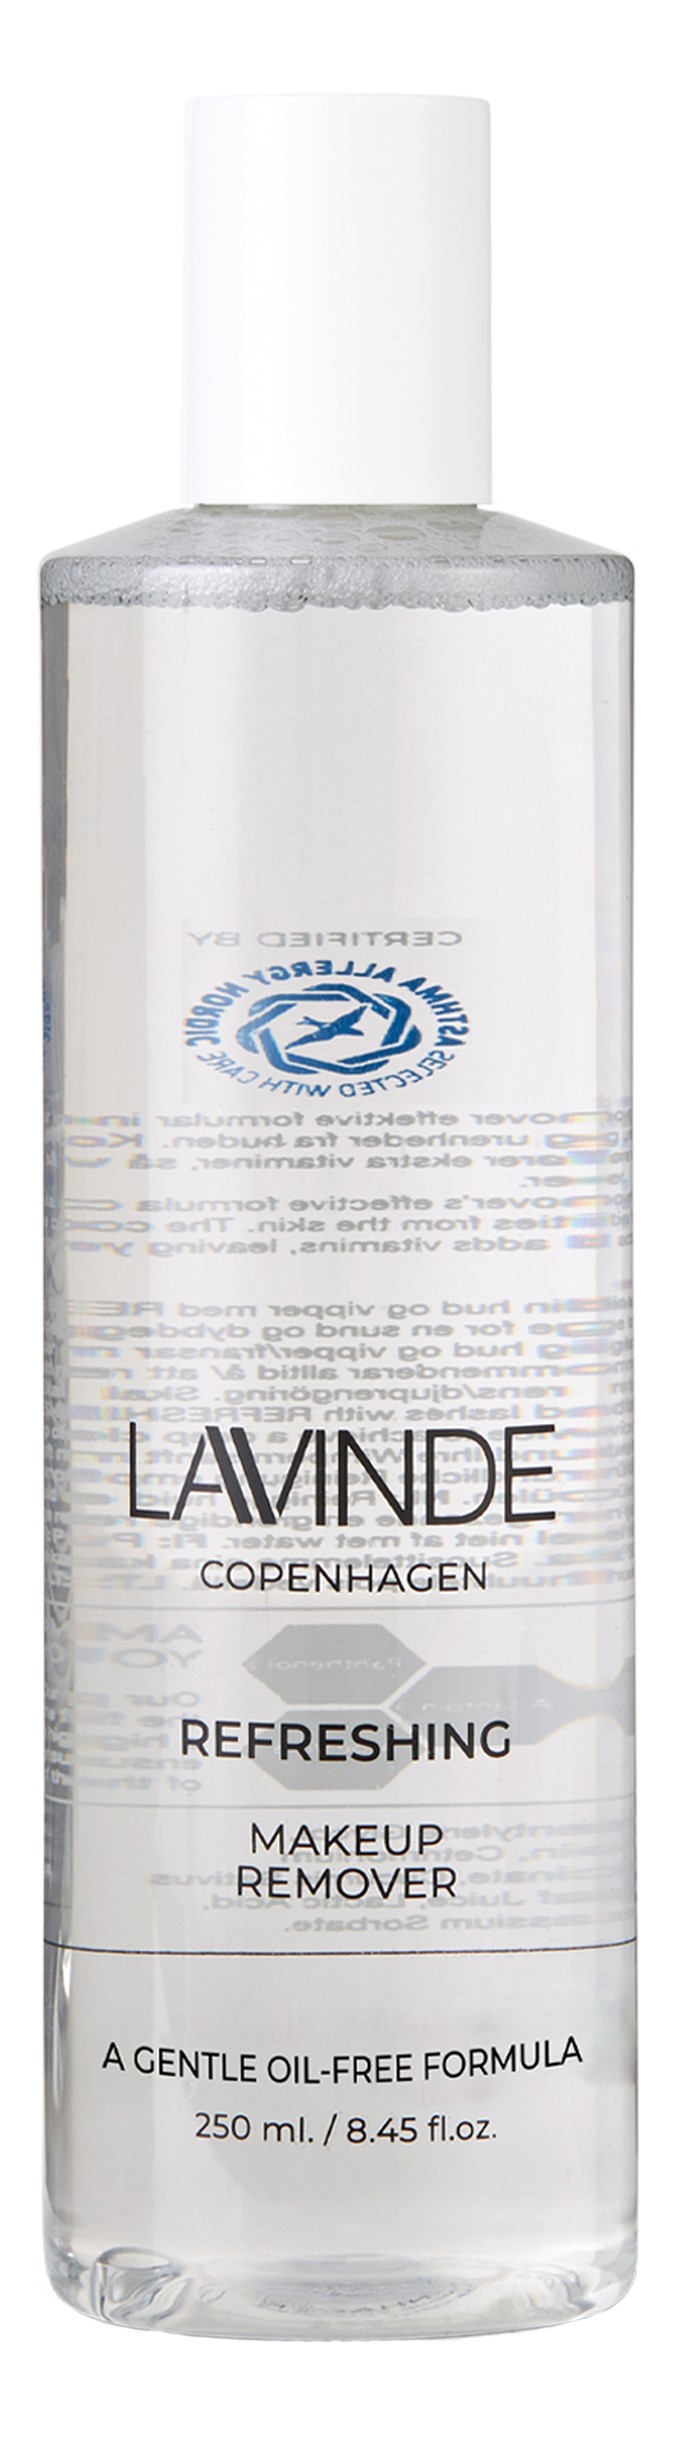 radioaktivitet Joseph Banks mode Lavinde Copenhagen REFRESHING - Micellar Water 250 ml | lyko.com